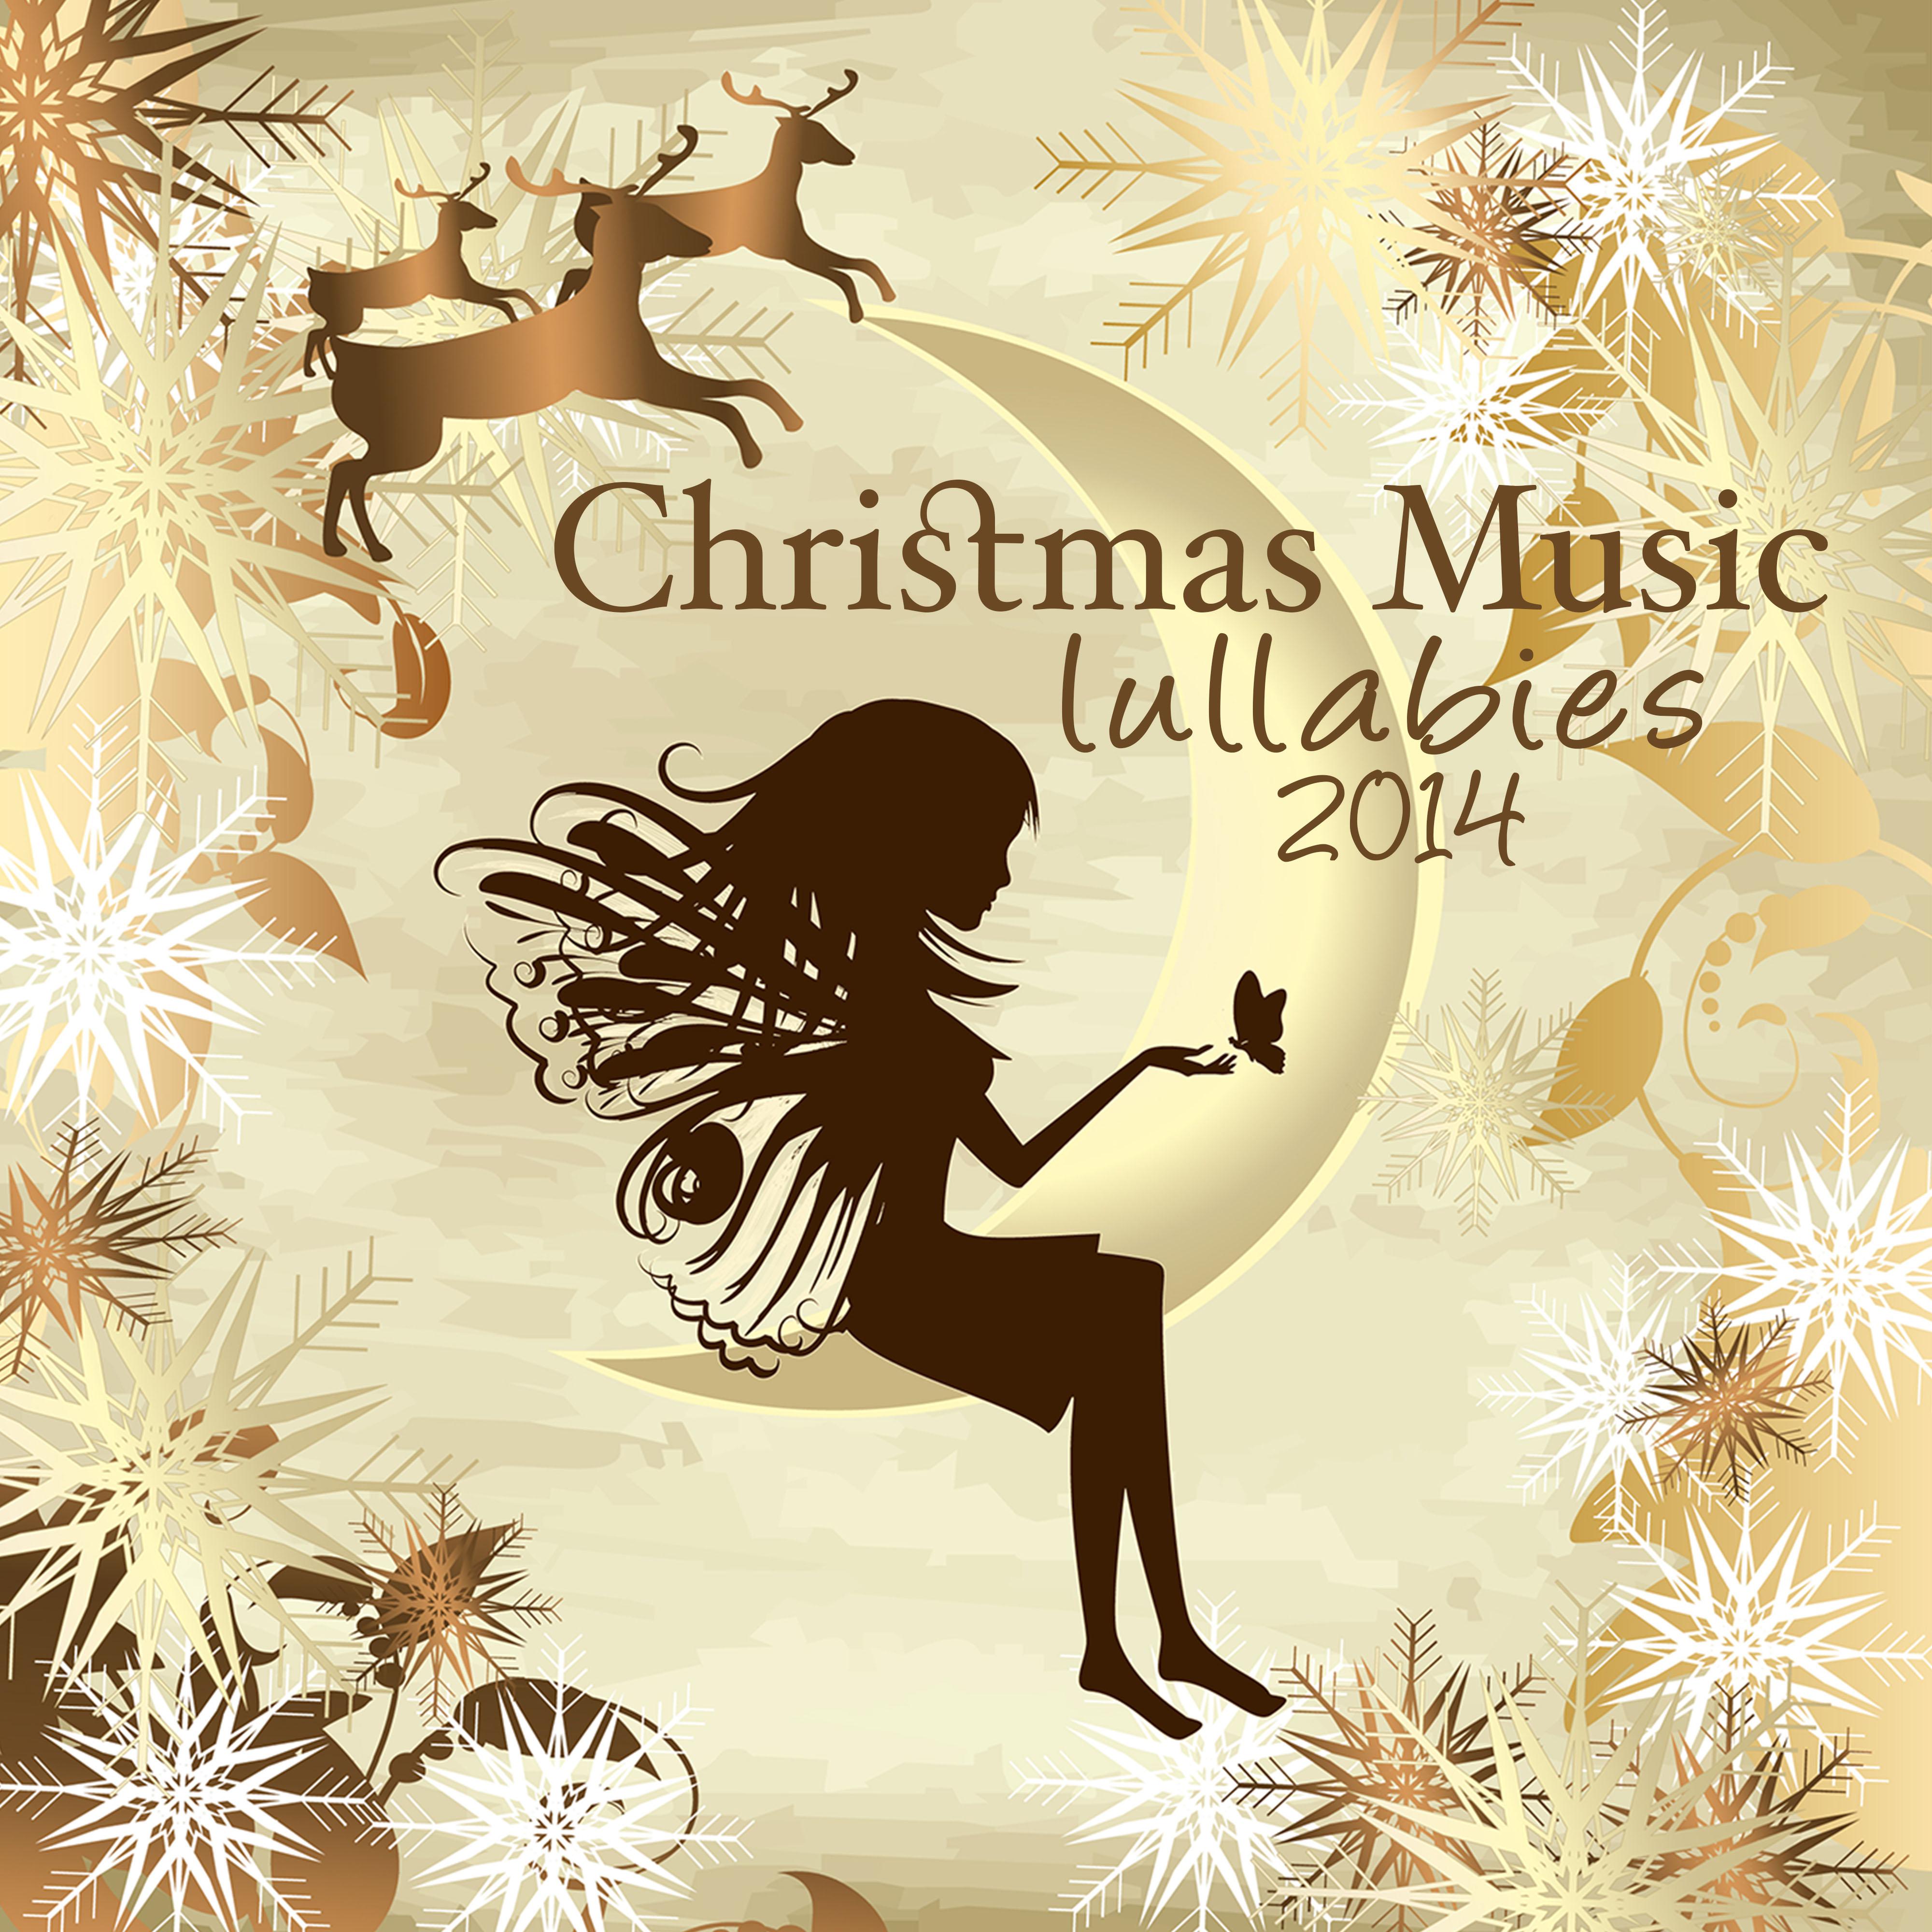 Christmas Music Lullabies 2014  Soft Healing Nature Music  Traditional Christmas Songs for Baby Sleep, Classical Music Lullaby for Christmas Time